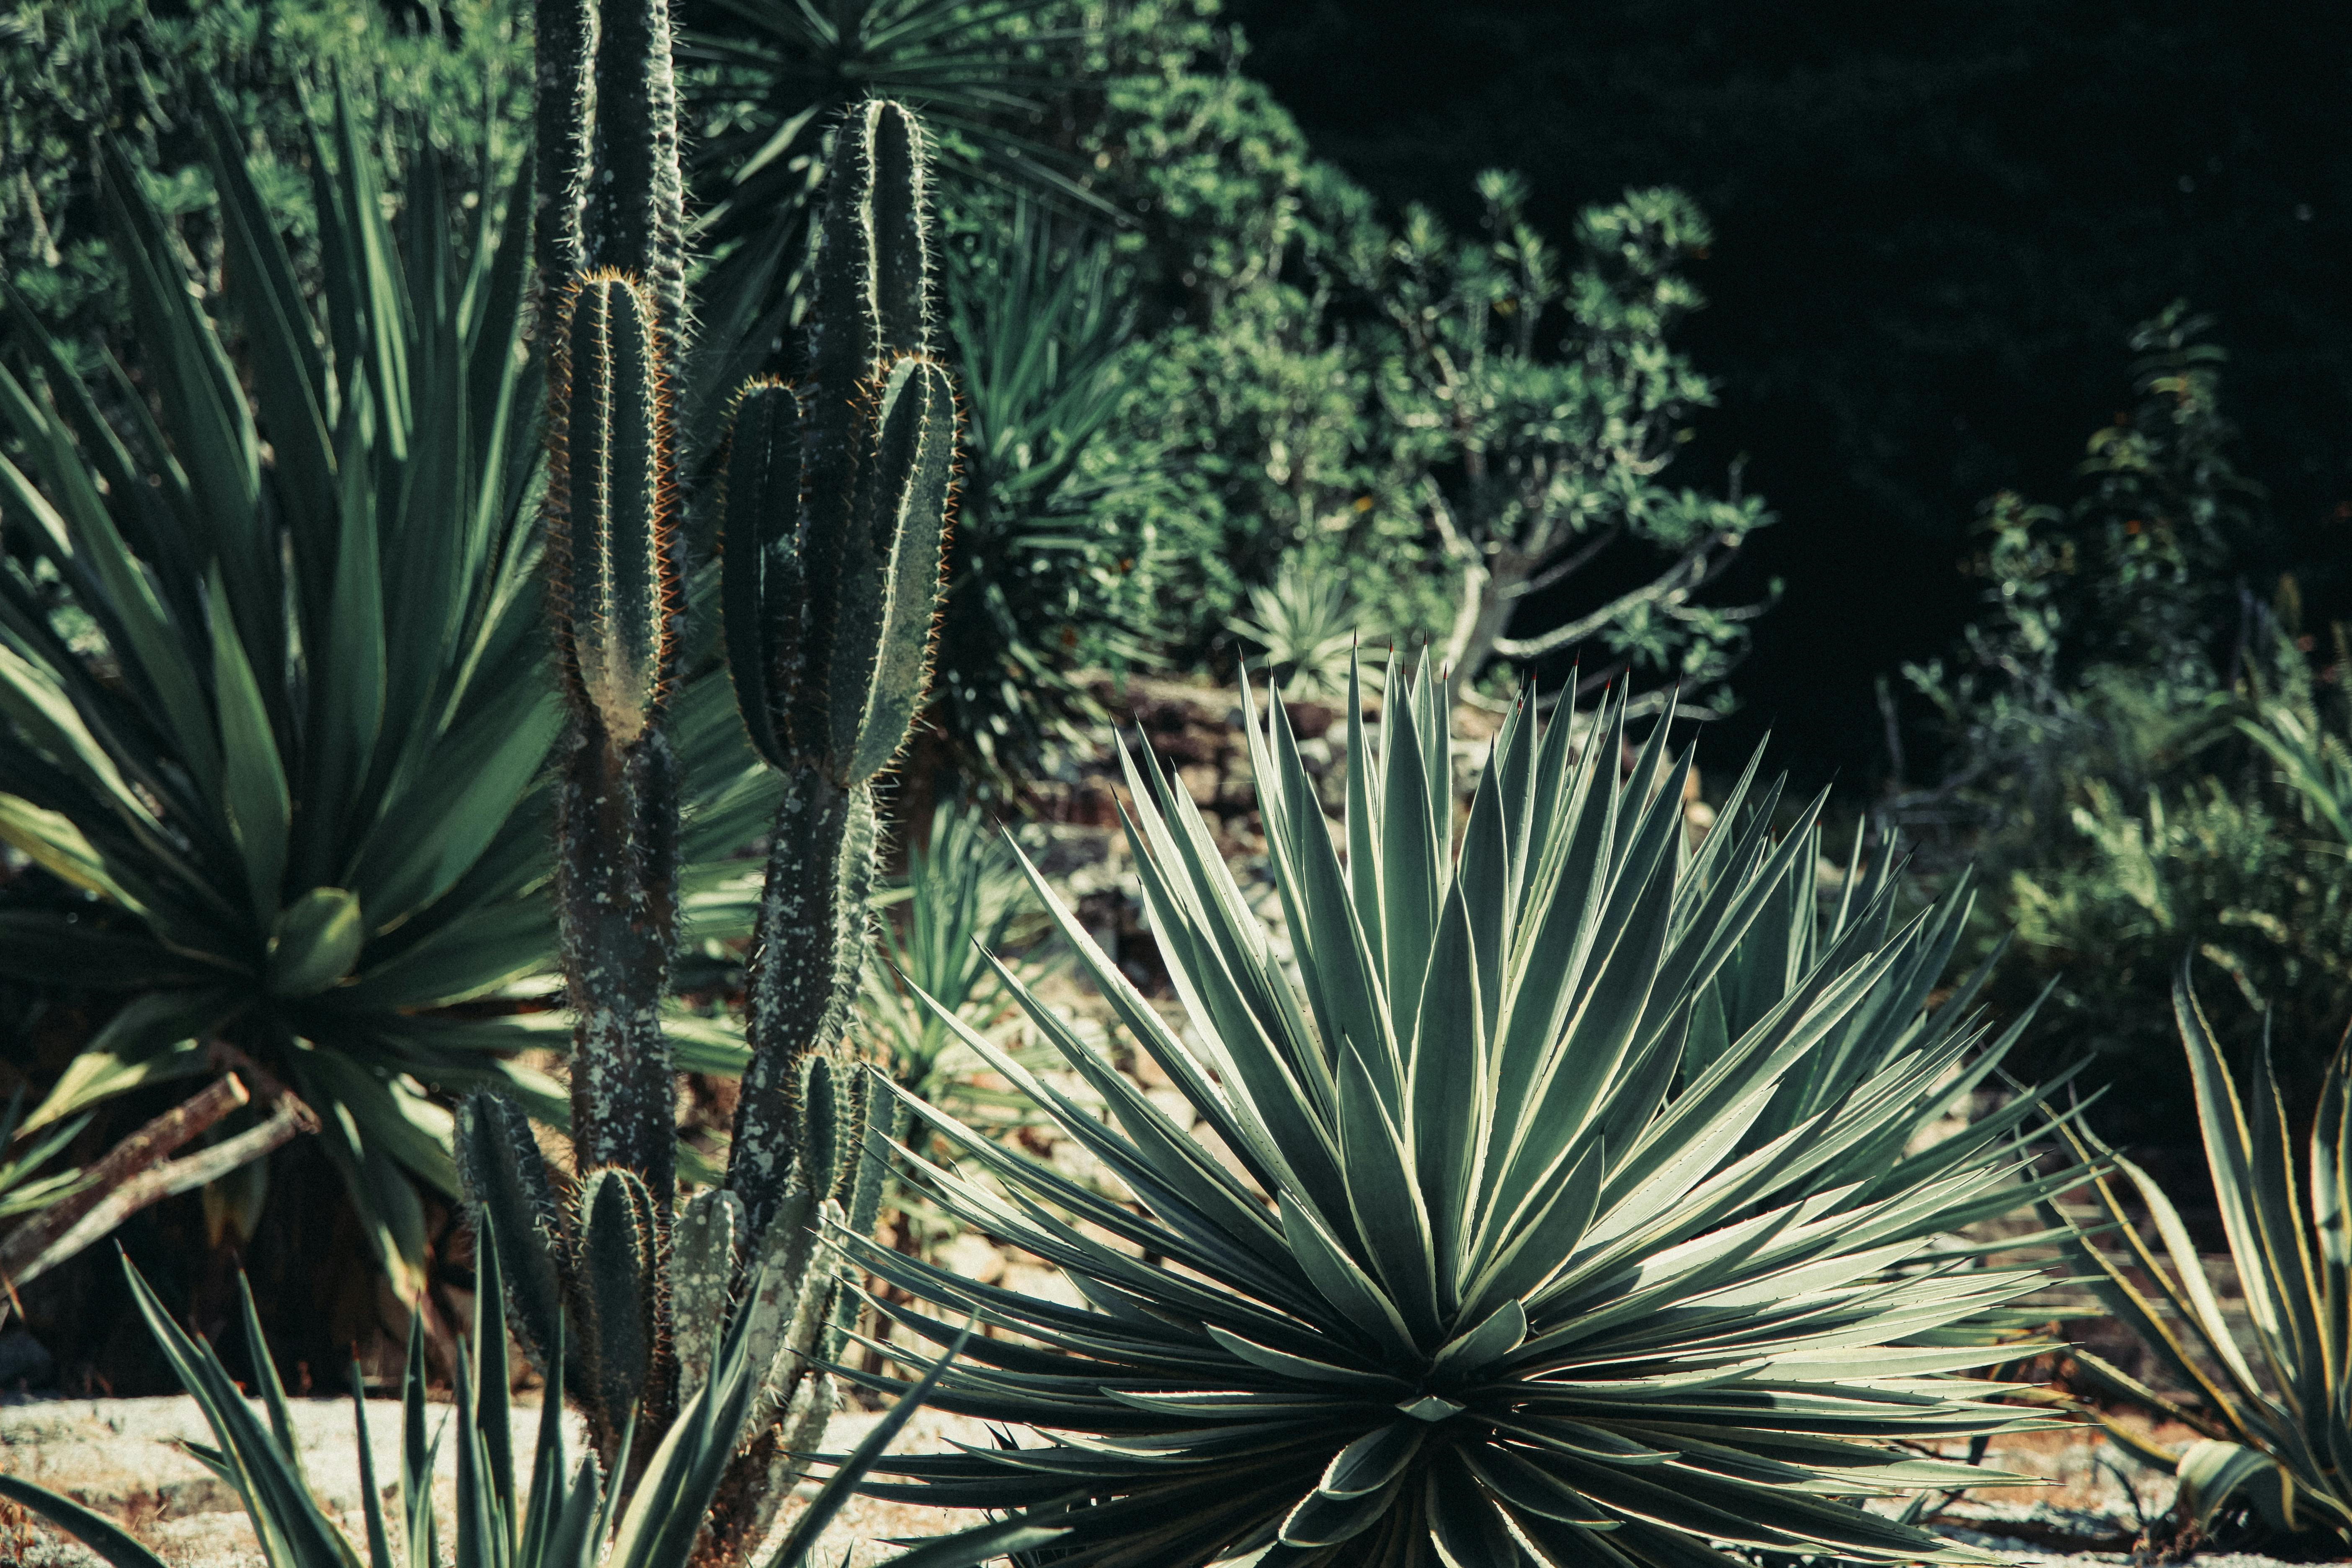 yucca and cactus photo by Nikita Belokhonov (ftu from pexels)